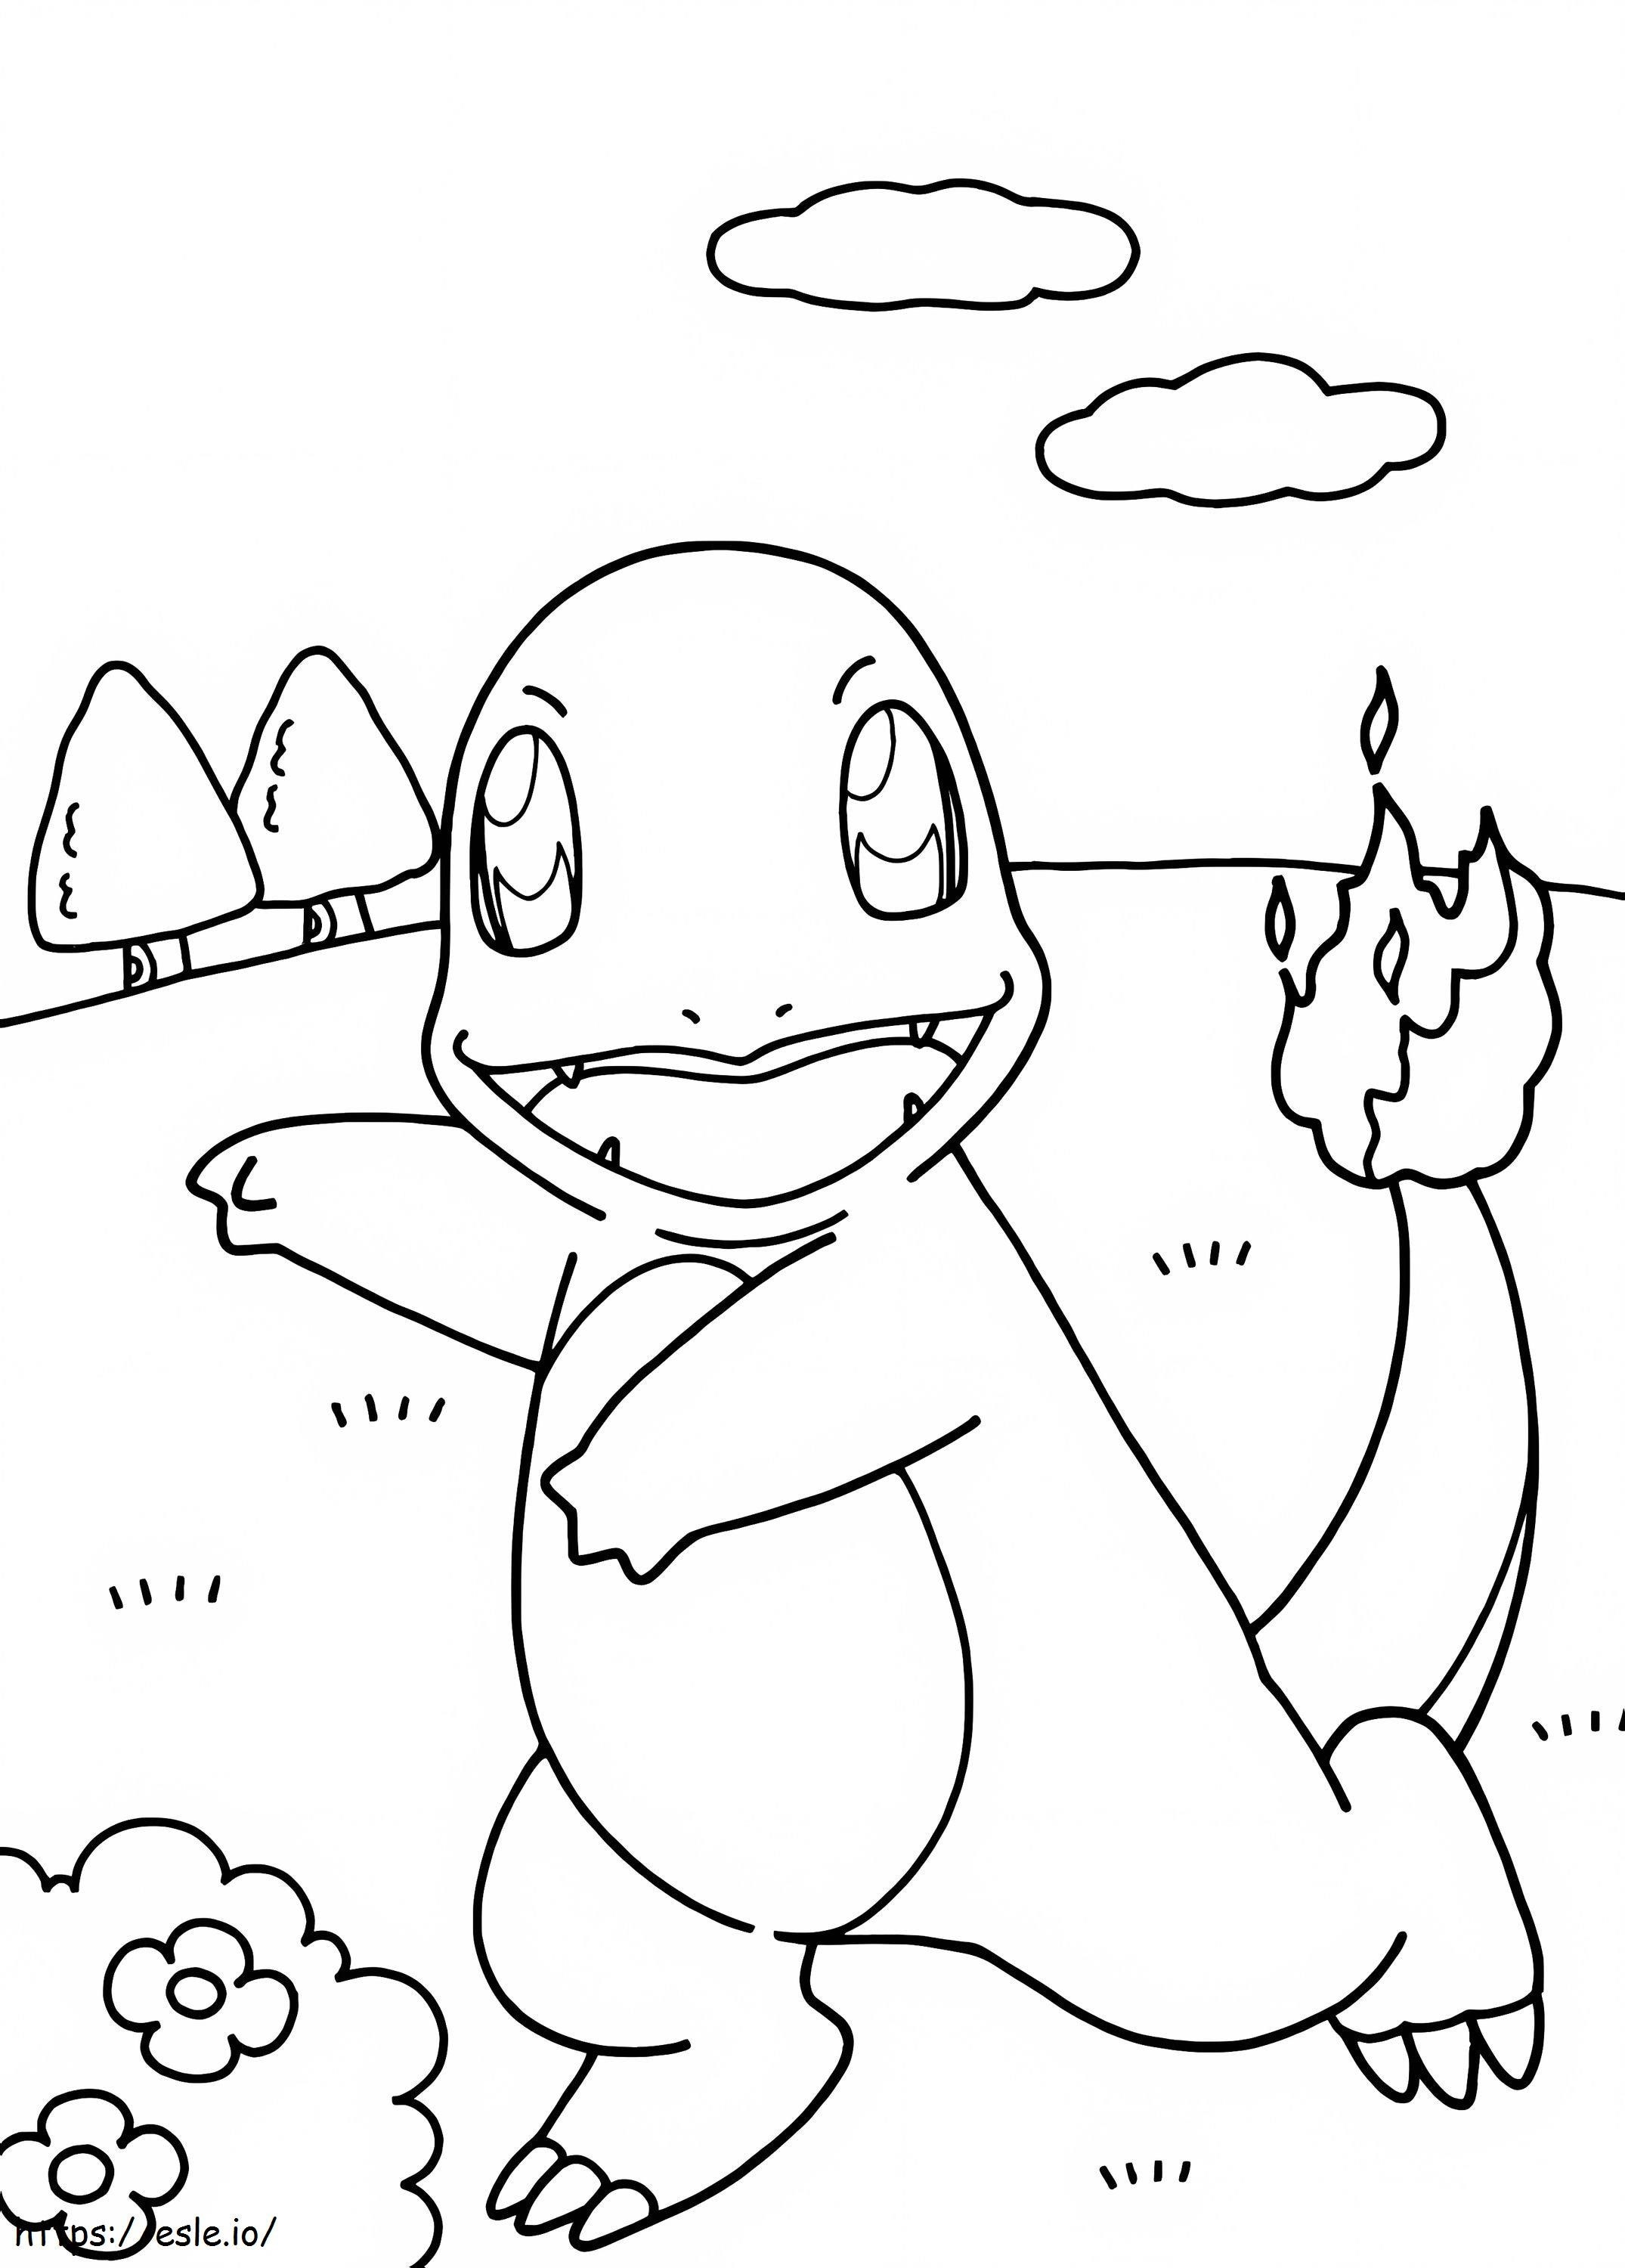 Pokemon Charmander 3 coloring page